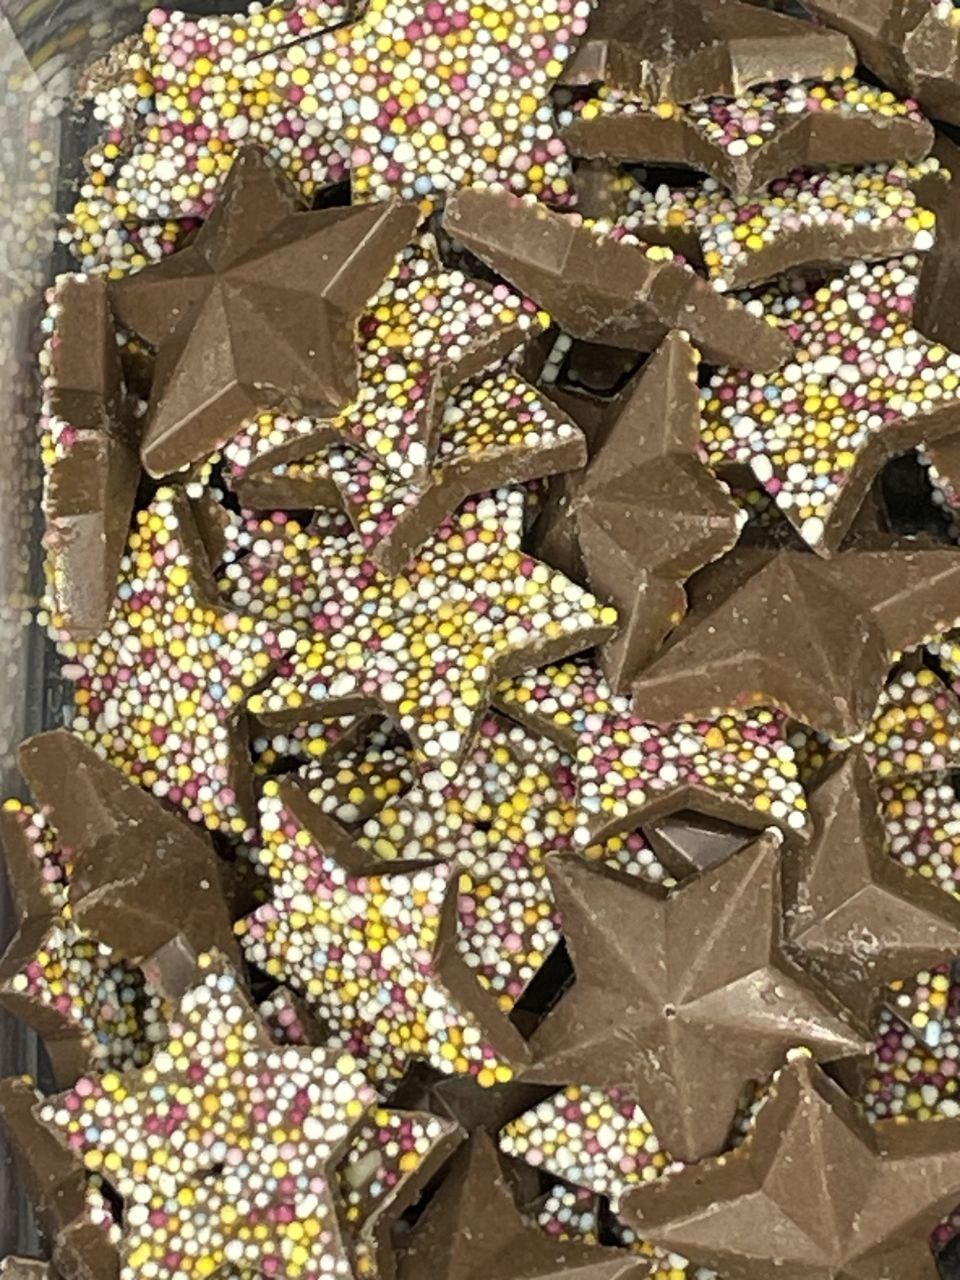 Sprinkled Chocolate Stars